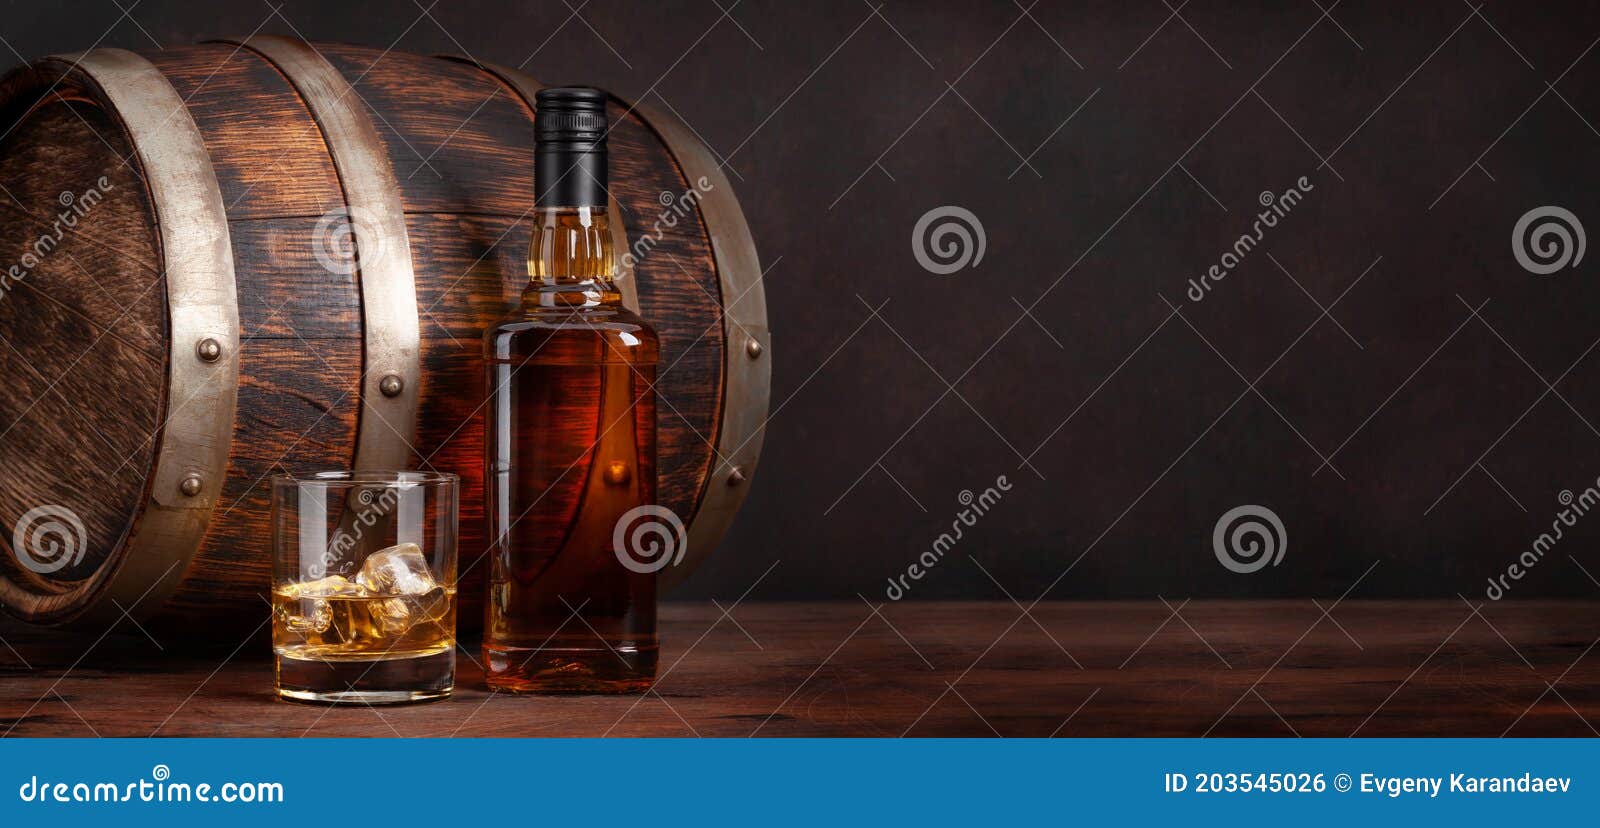 https://thumbs.dreamstime.com/z/scotch-whiskey-bottle-glass-old-barrel-wooden-copy-space-203545026.jpg